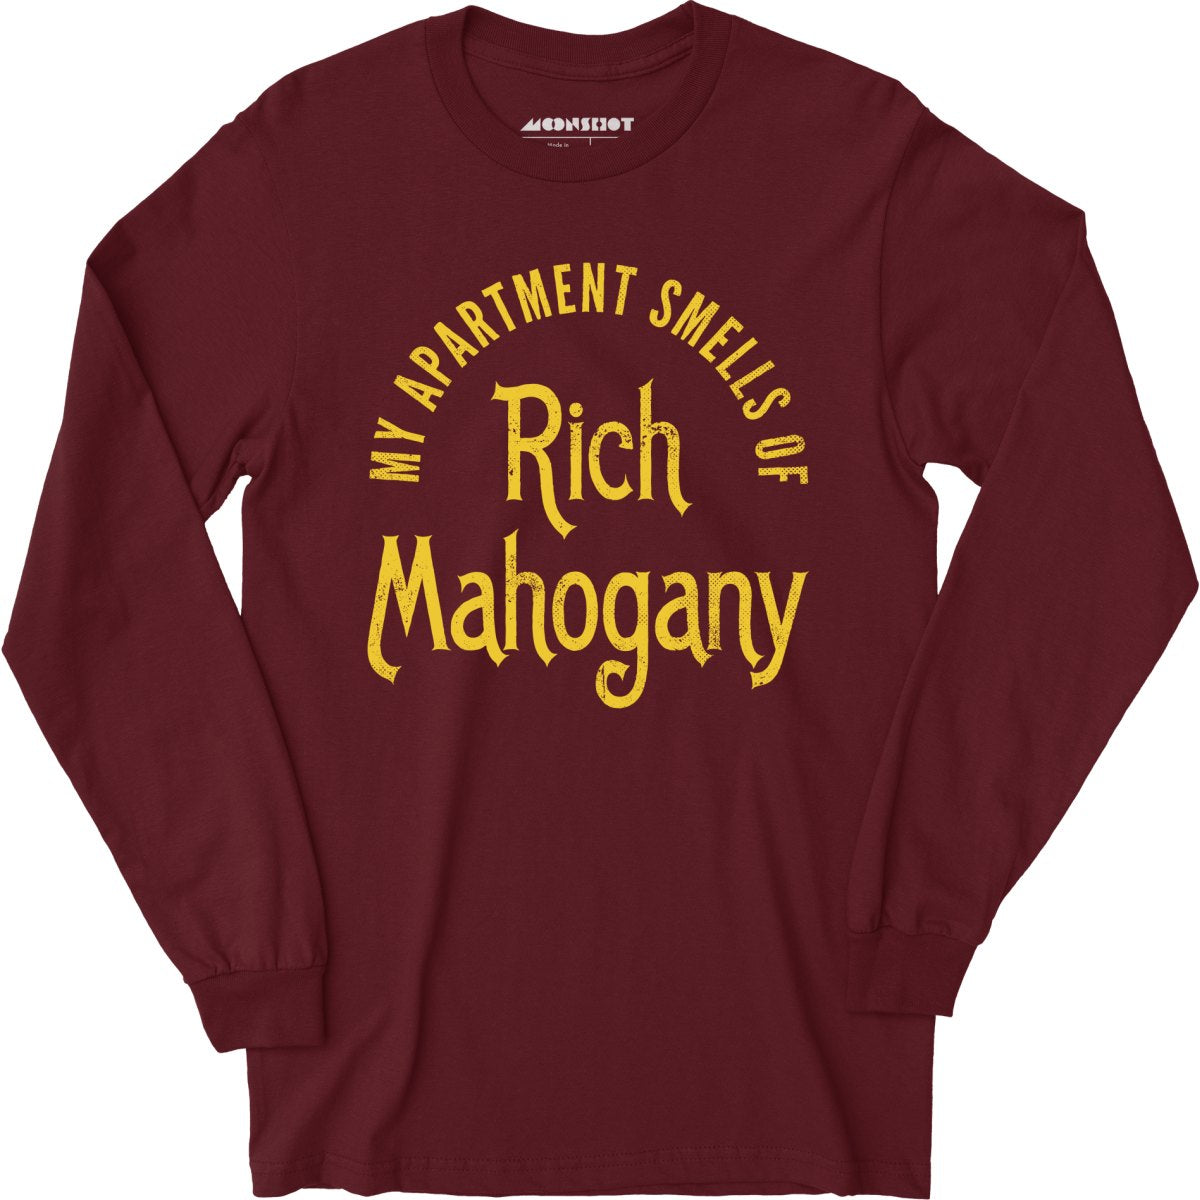 My Apartment Smells of Rich Mahogany - Long Sleeve T-Shirt